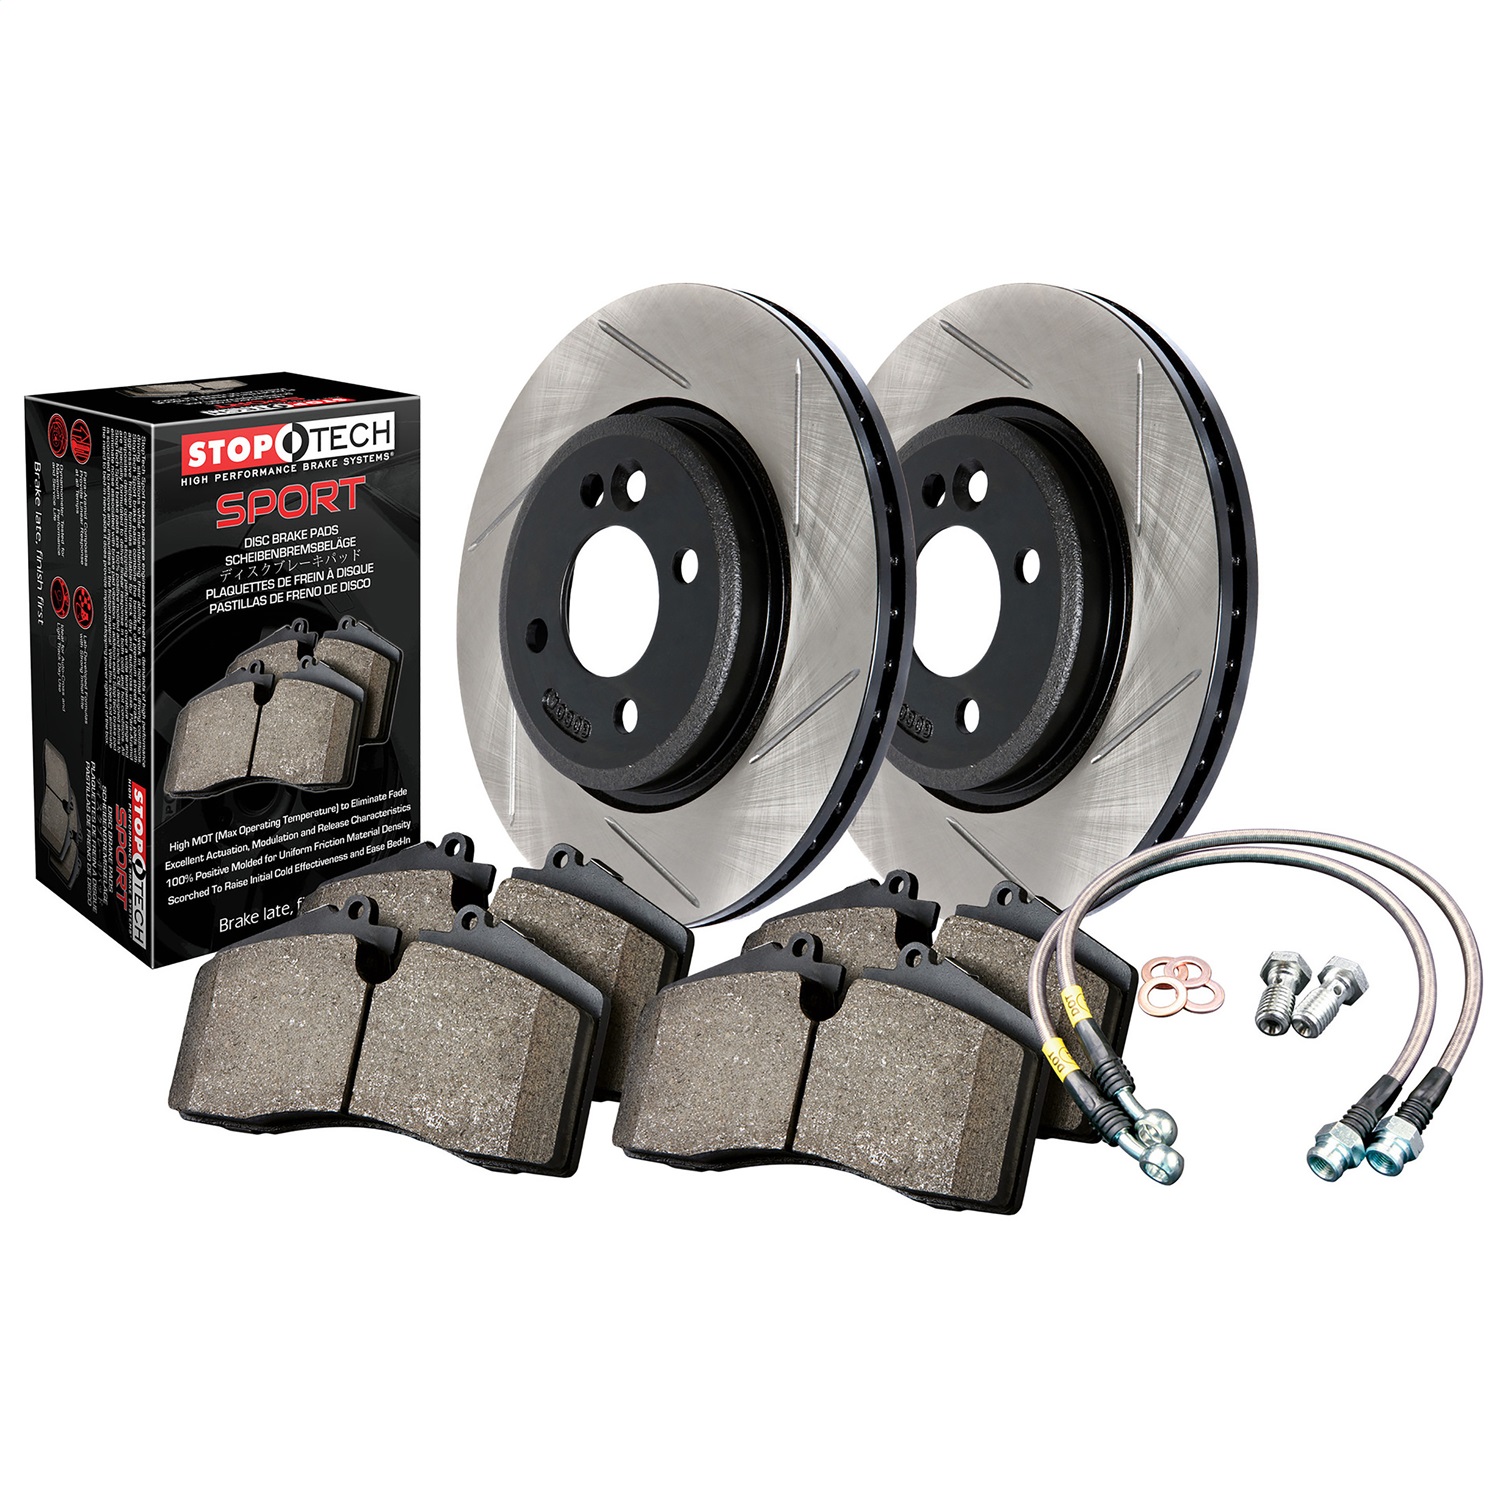 StopTech 977.45002R Sport Disc Brake Kit w/Slotted Rotors Fits 06-15 MX-5 Miata